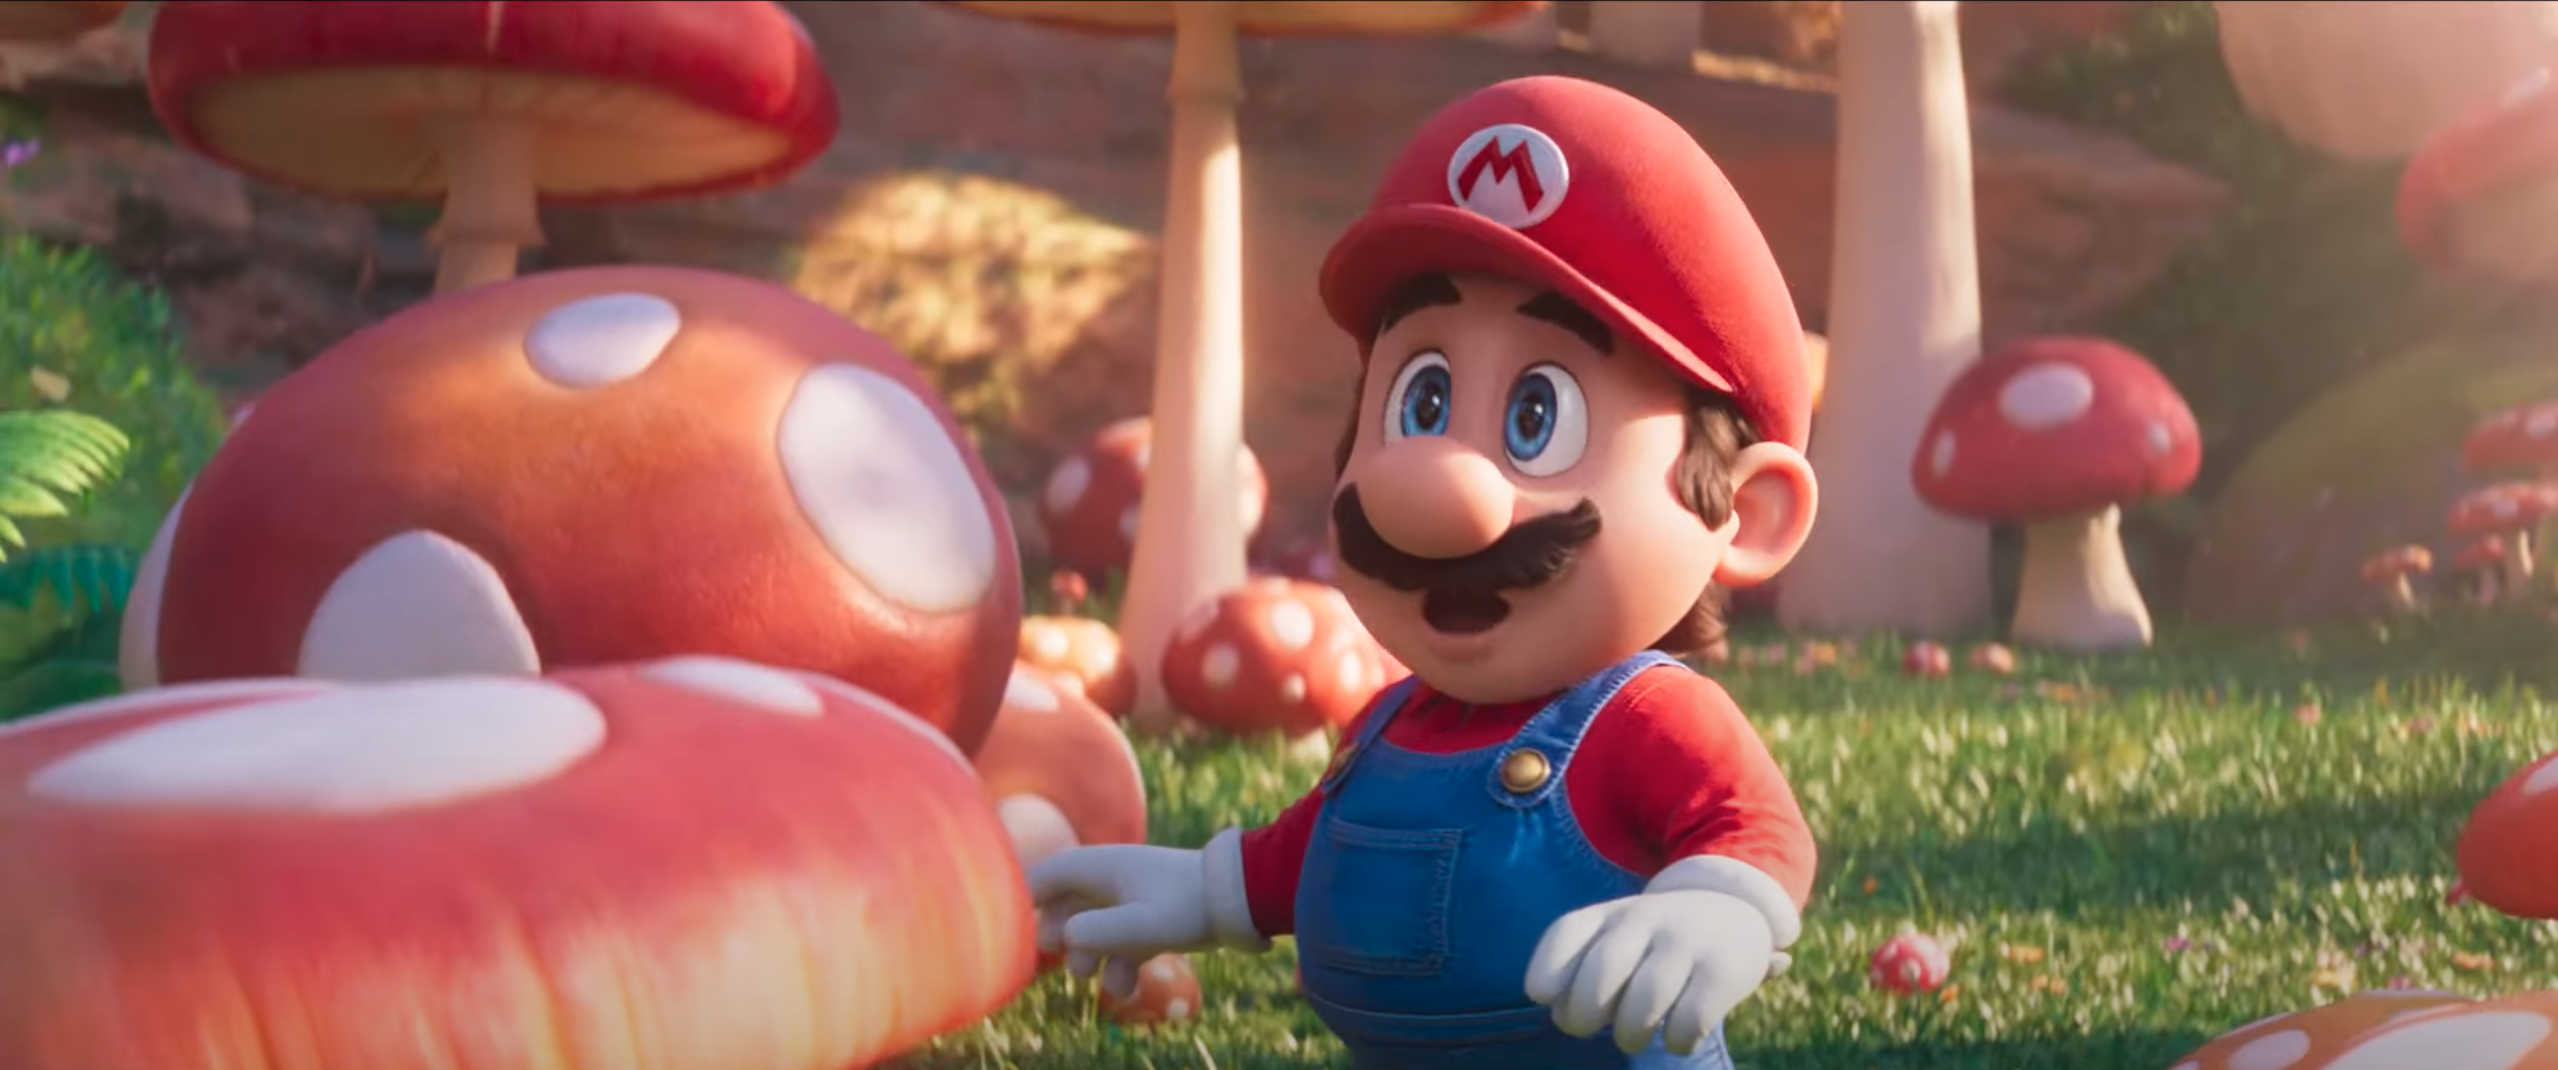 Mario (Italian)  stands in awe amongst the mushrooms (not Italian) surrounding him in The Super Mario Bros. Movie